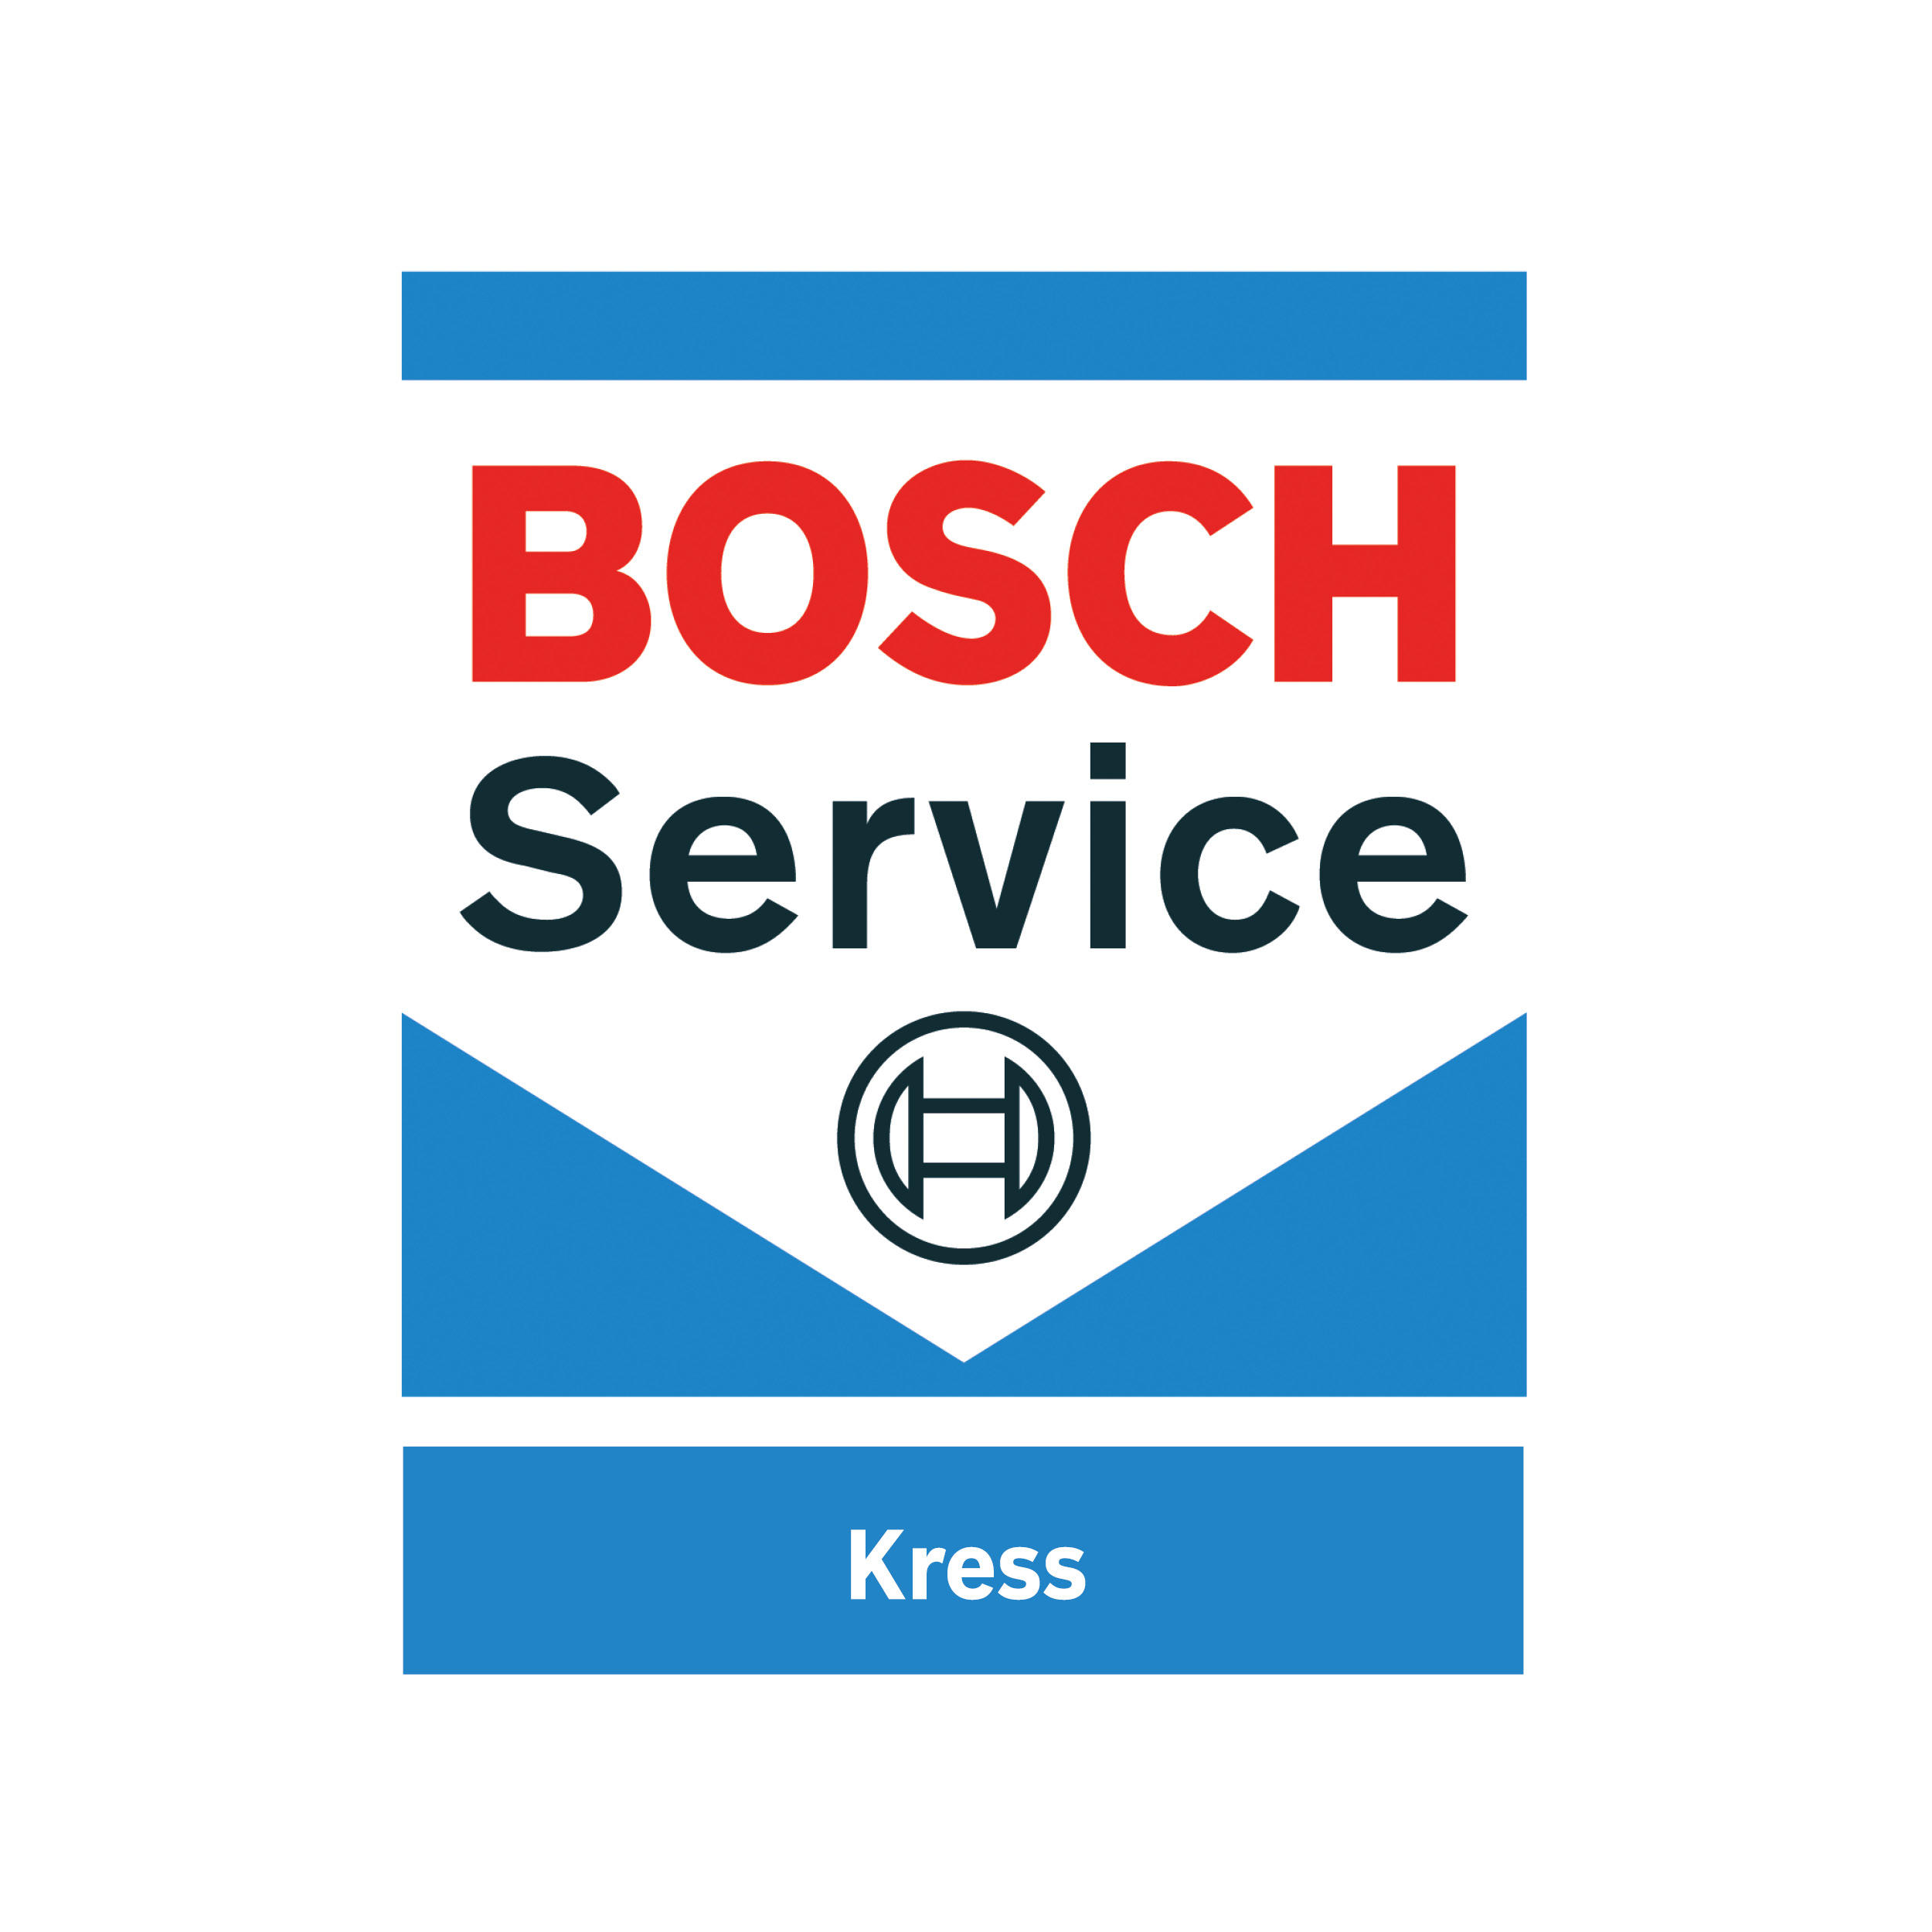 Car Service Kress in Heidelberg - Logo